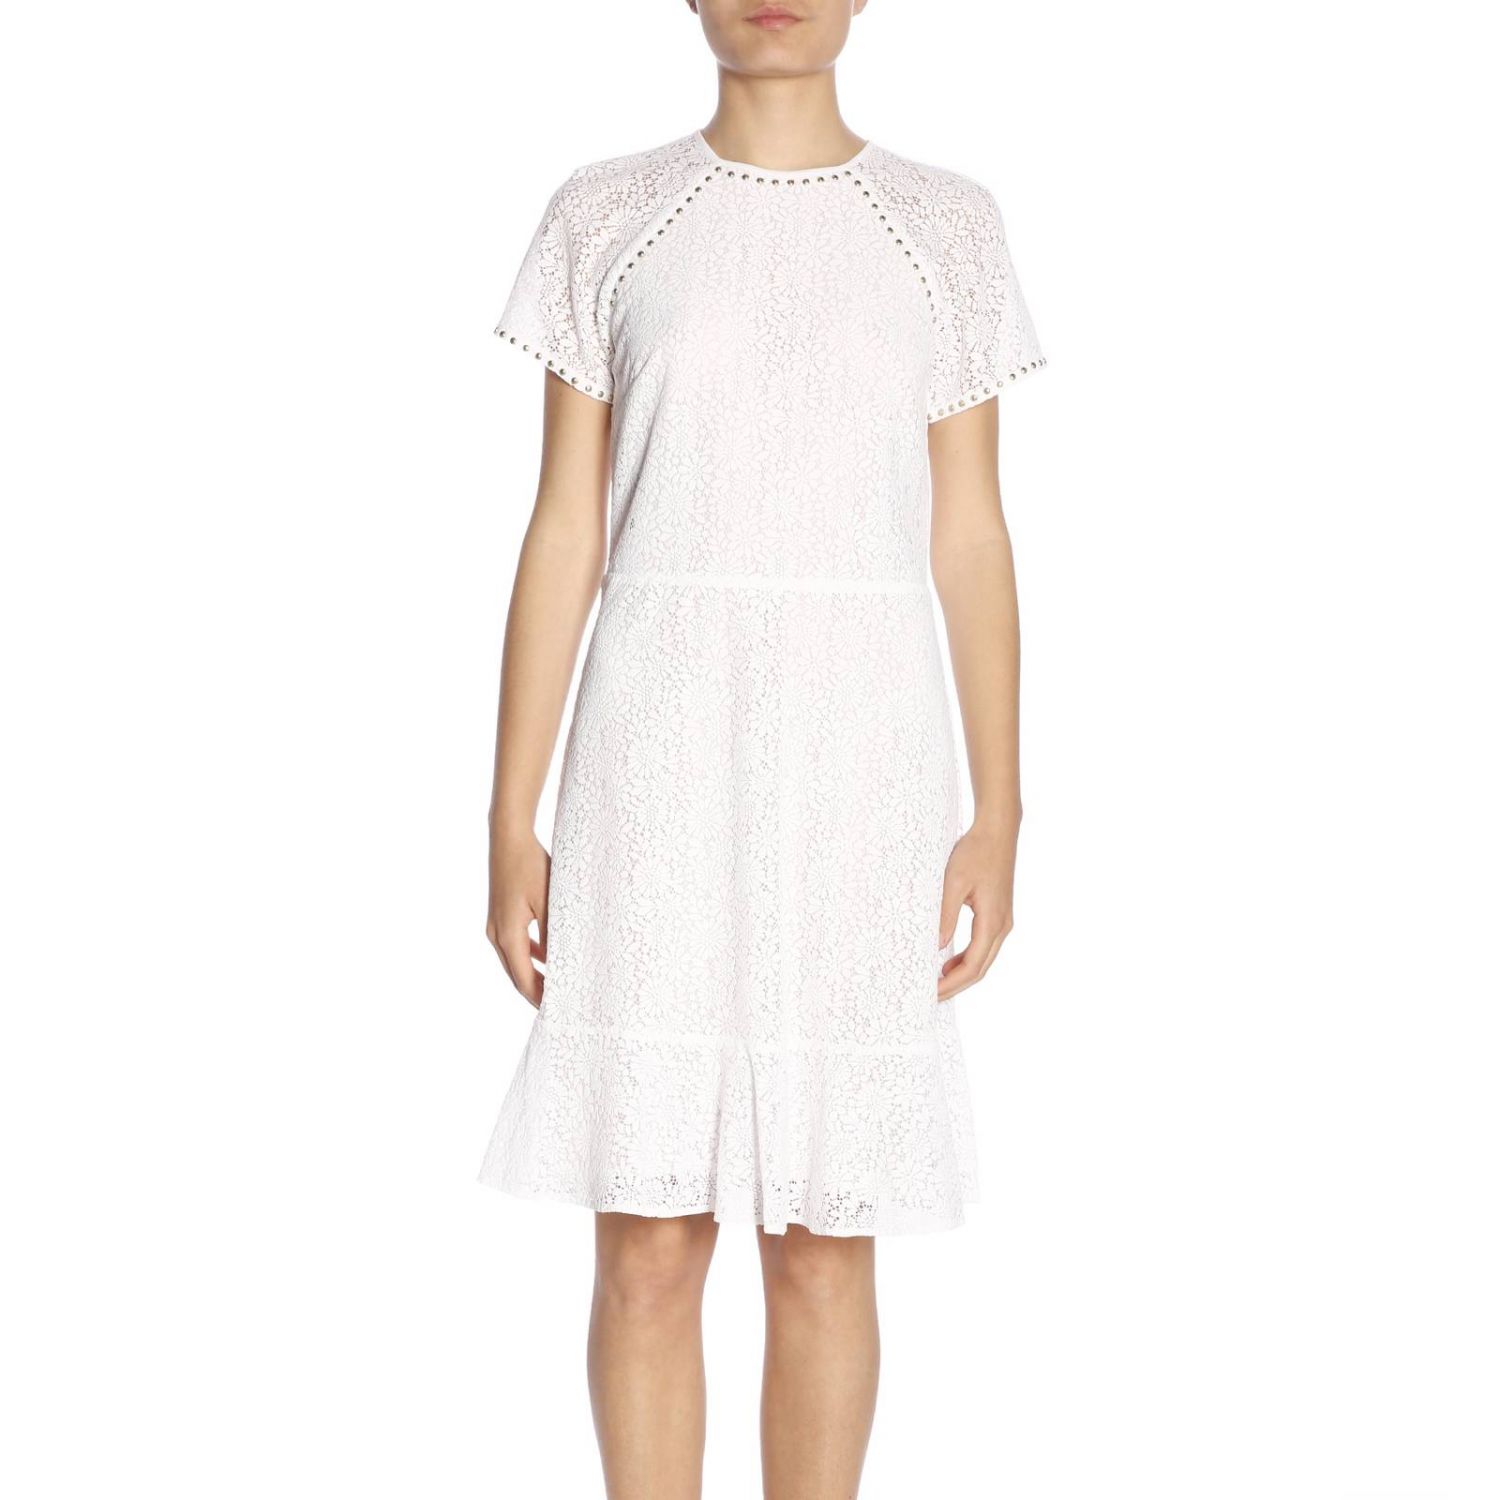 Michael Kors Outlet: dress for woman - White | Michael Kors dress ...